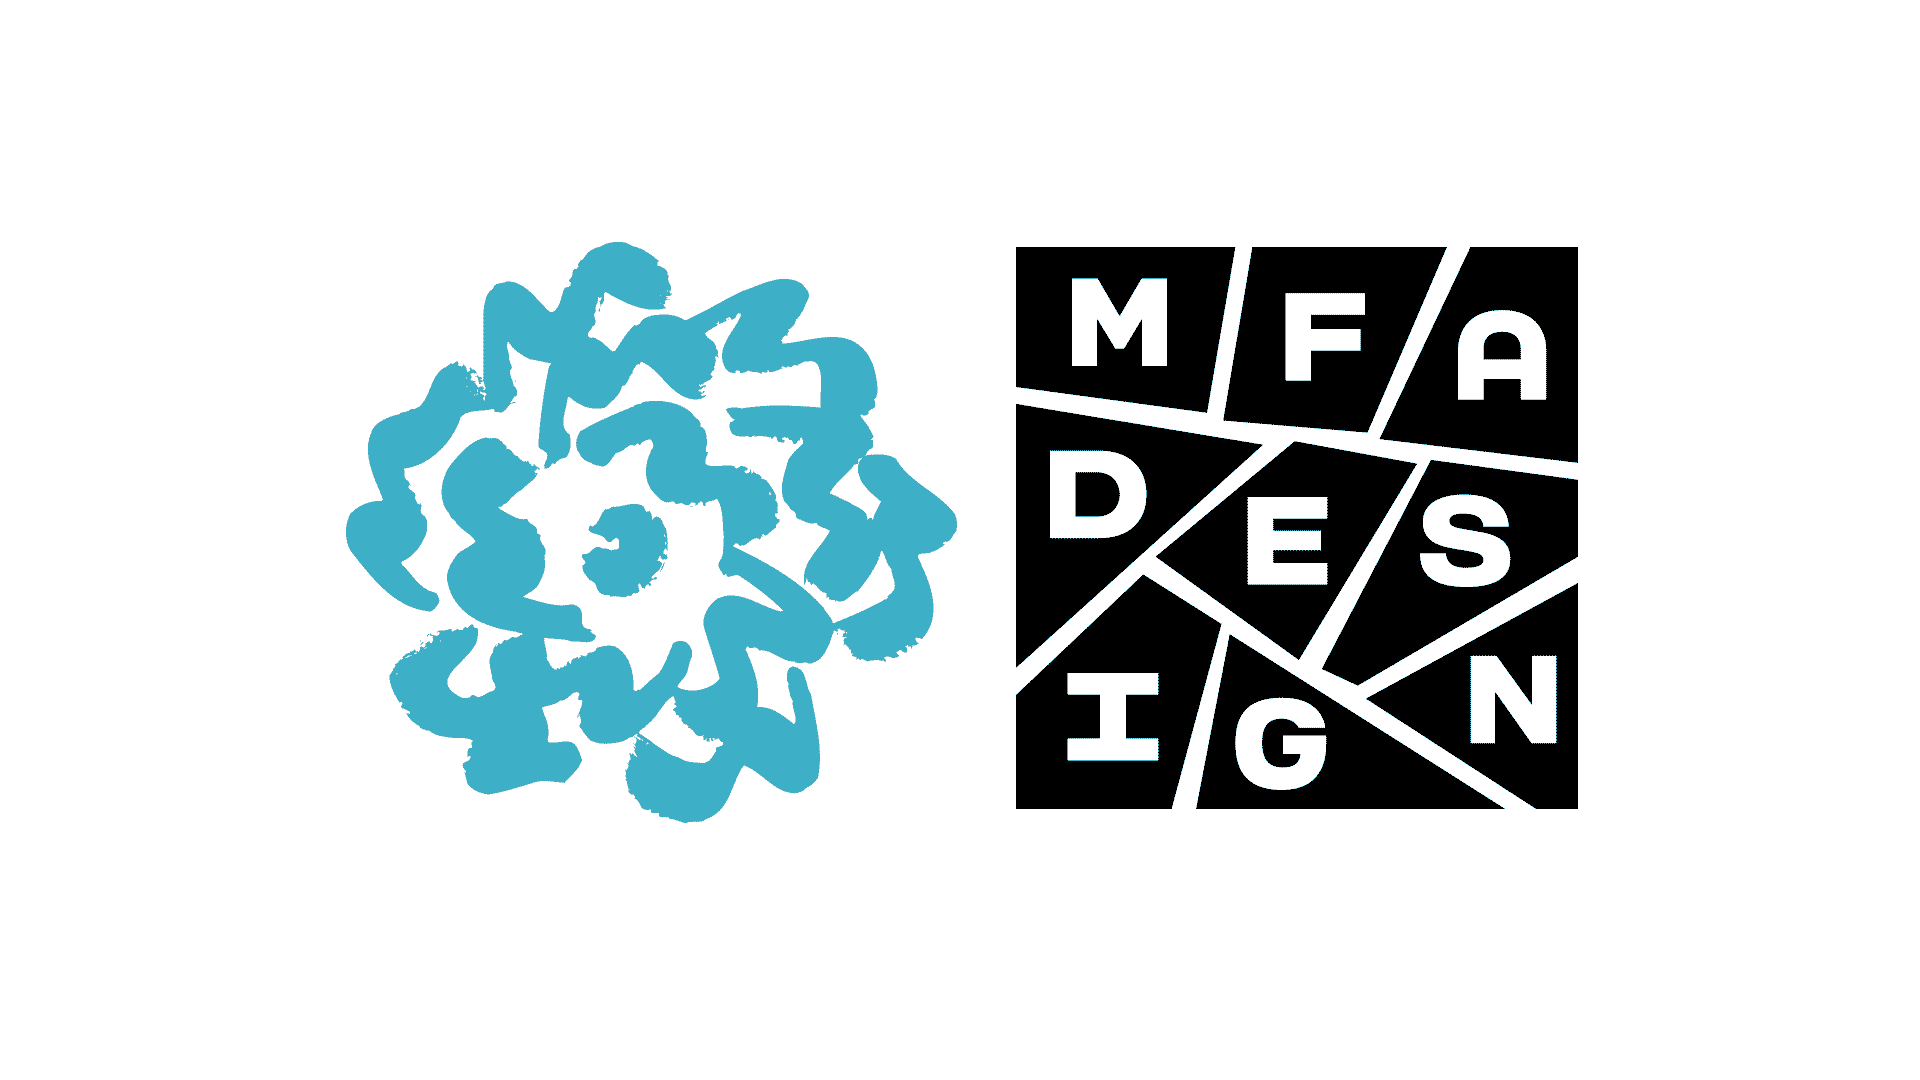 MFA Design logo in black